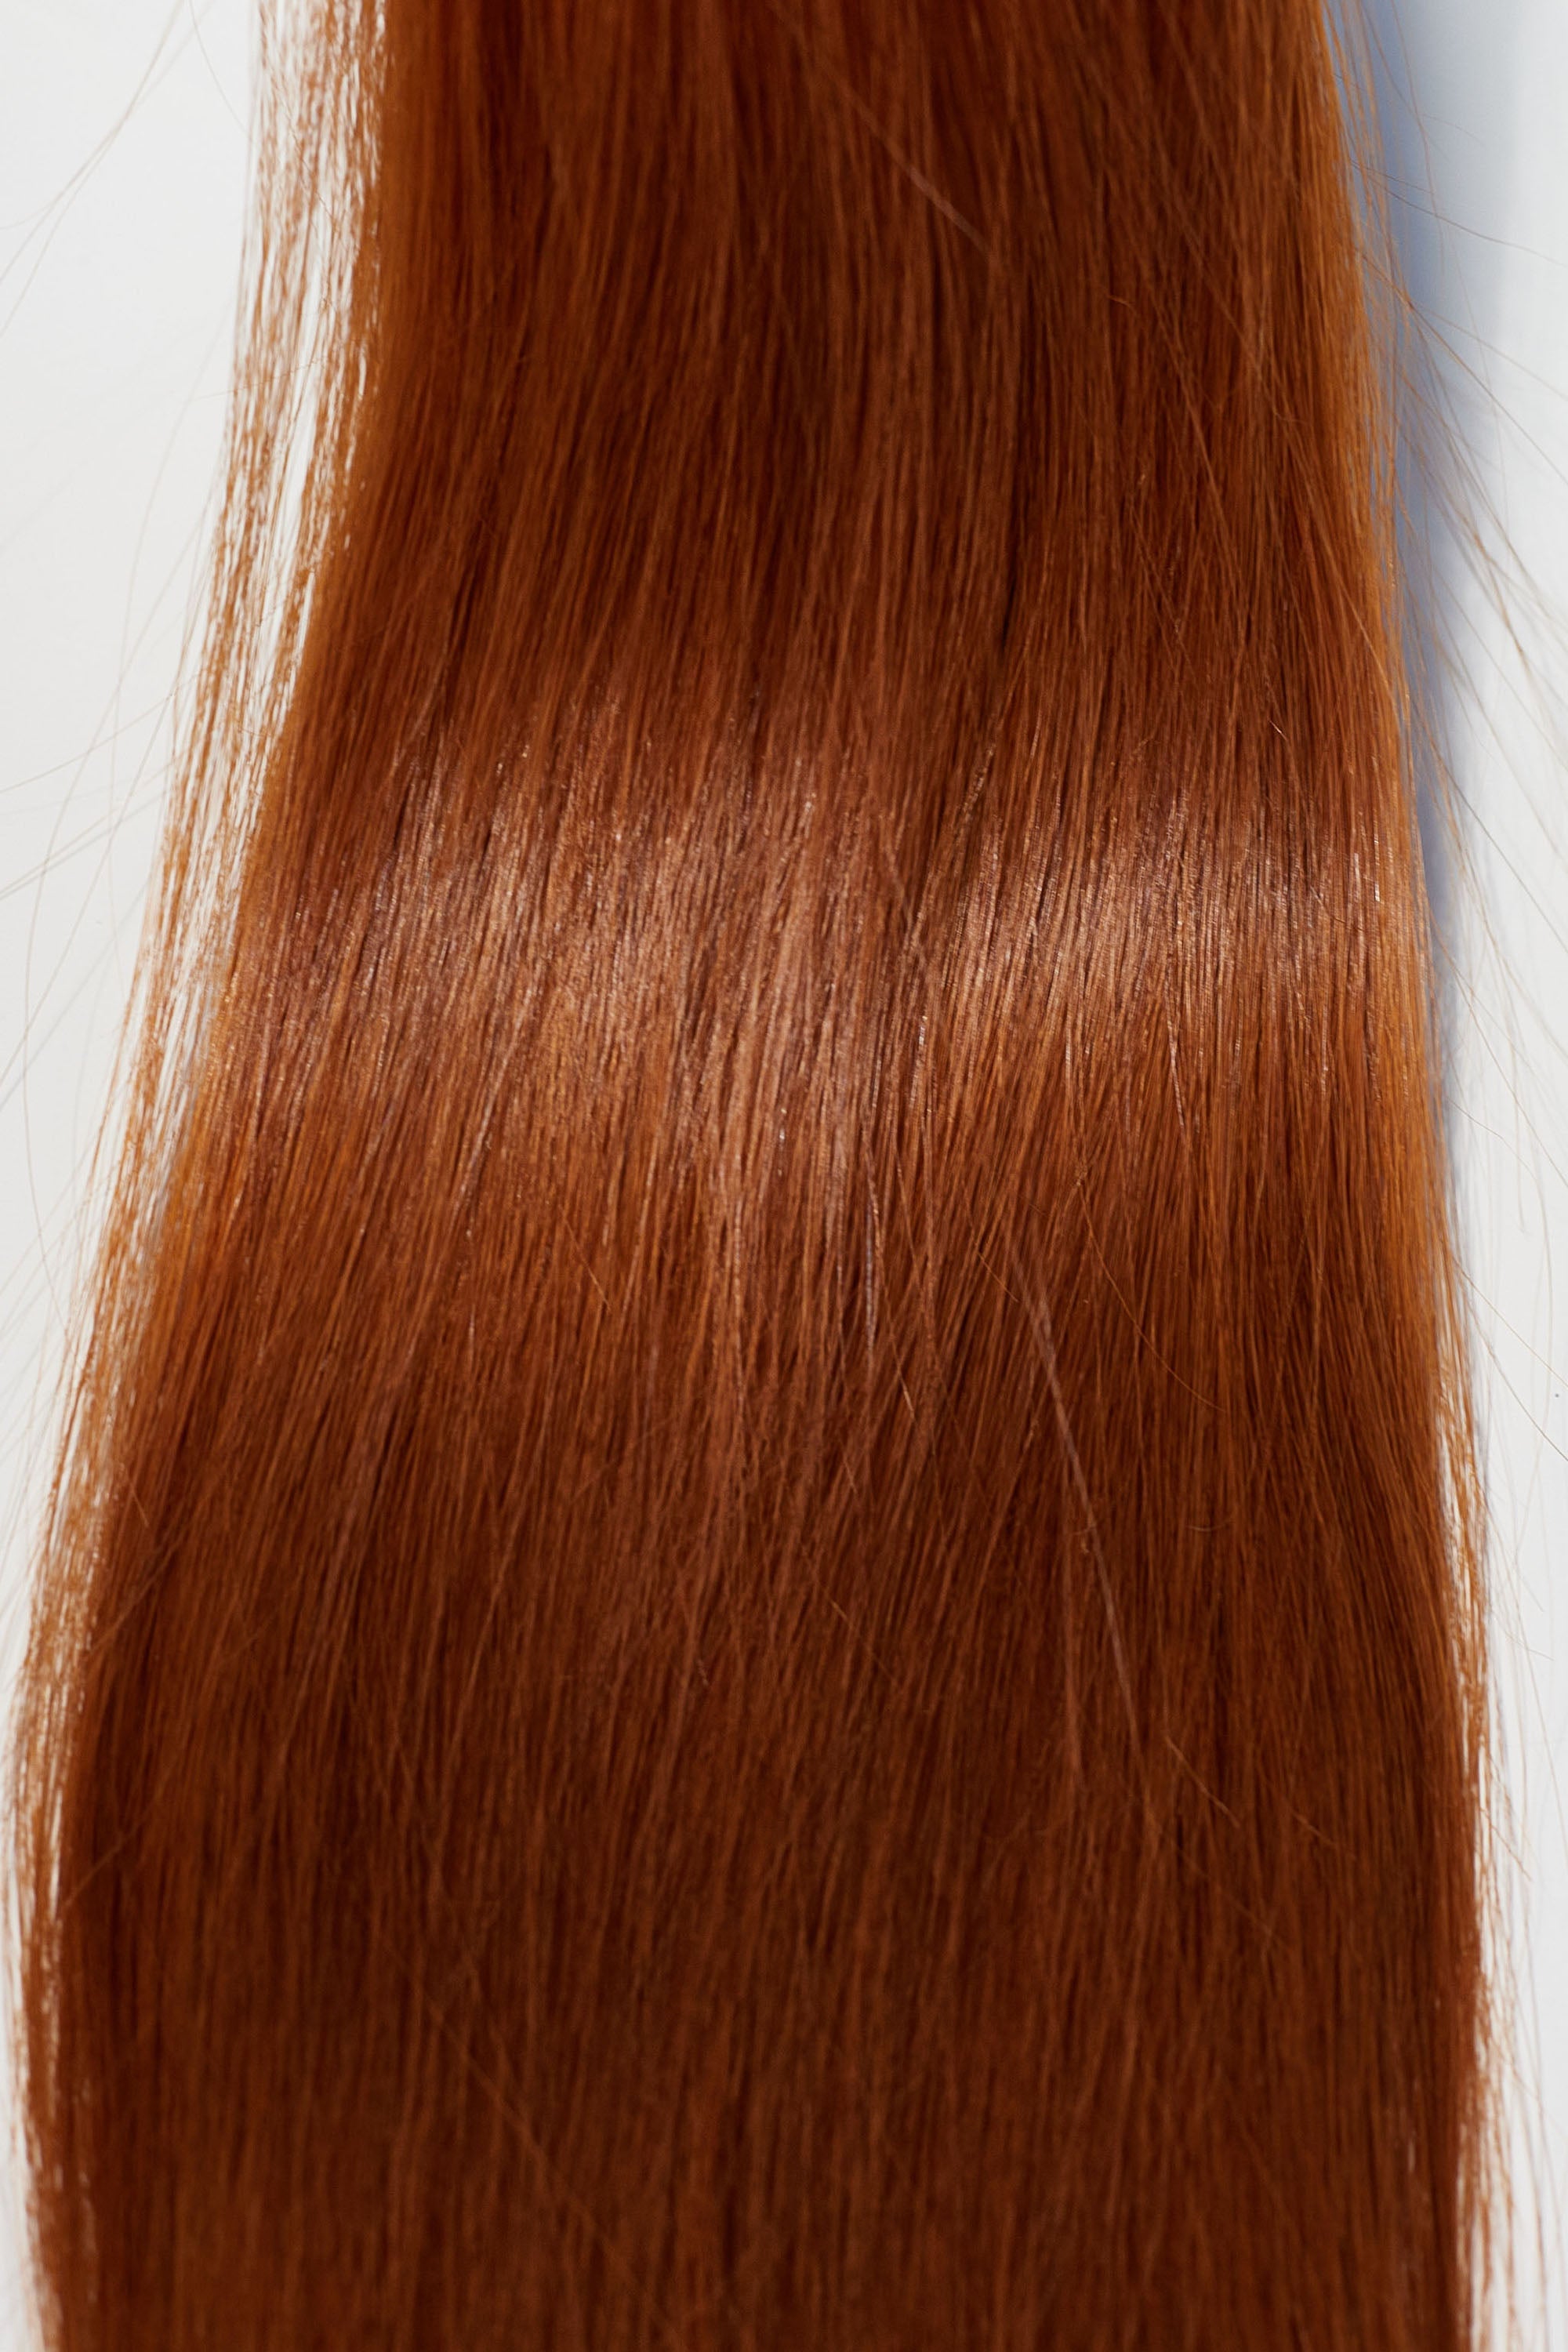 Behair professional Keratin Tip "Premium" 20" (50cm) Natural Straight Brilliant Copper #130 - 25g (1g each pcs) hair extensions